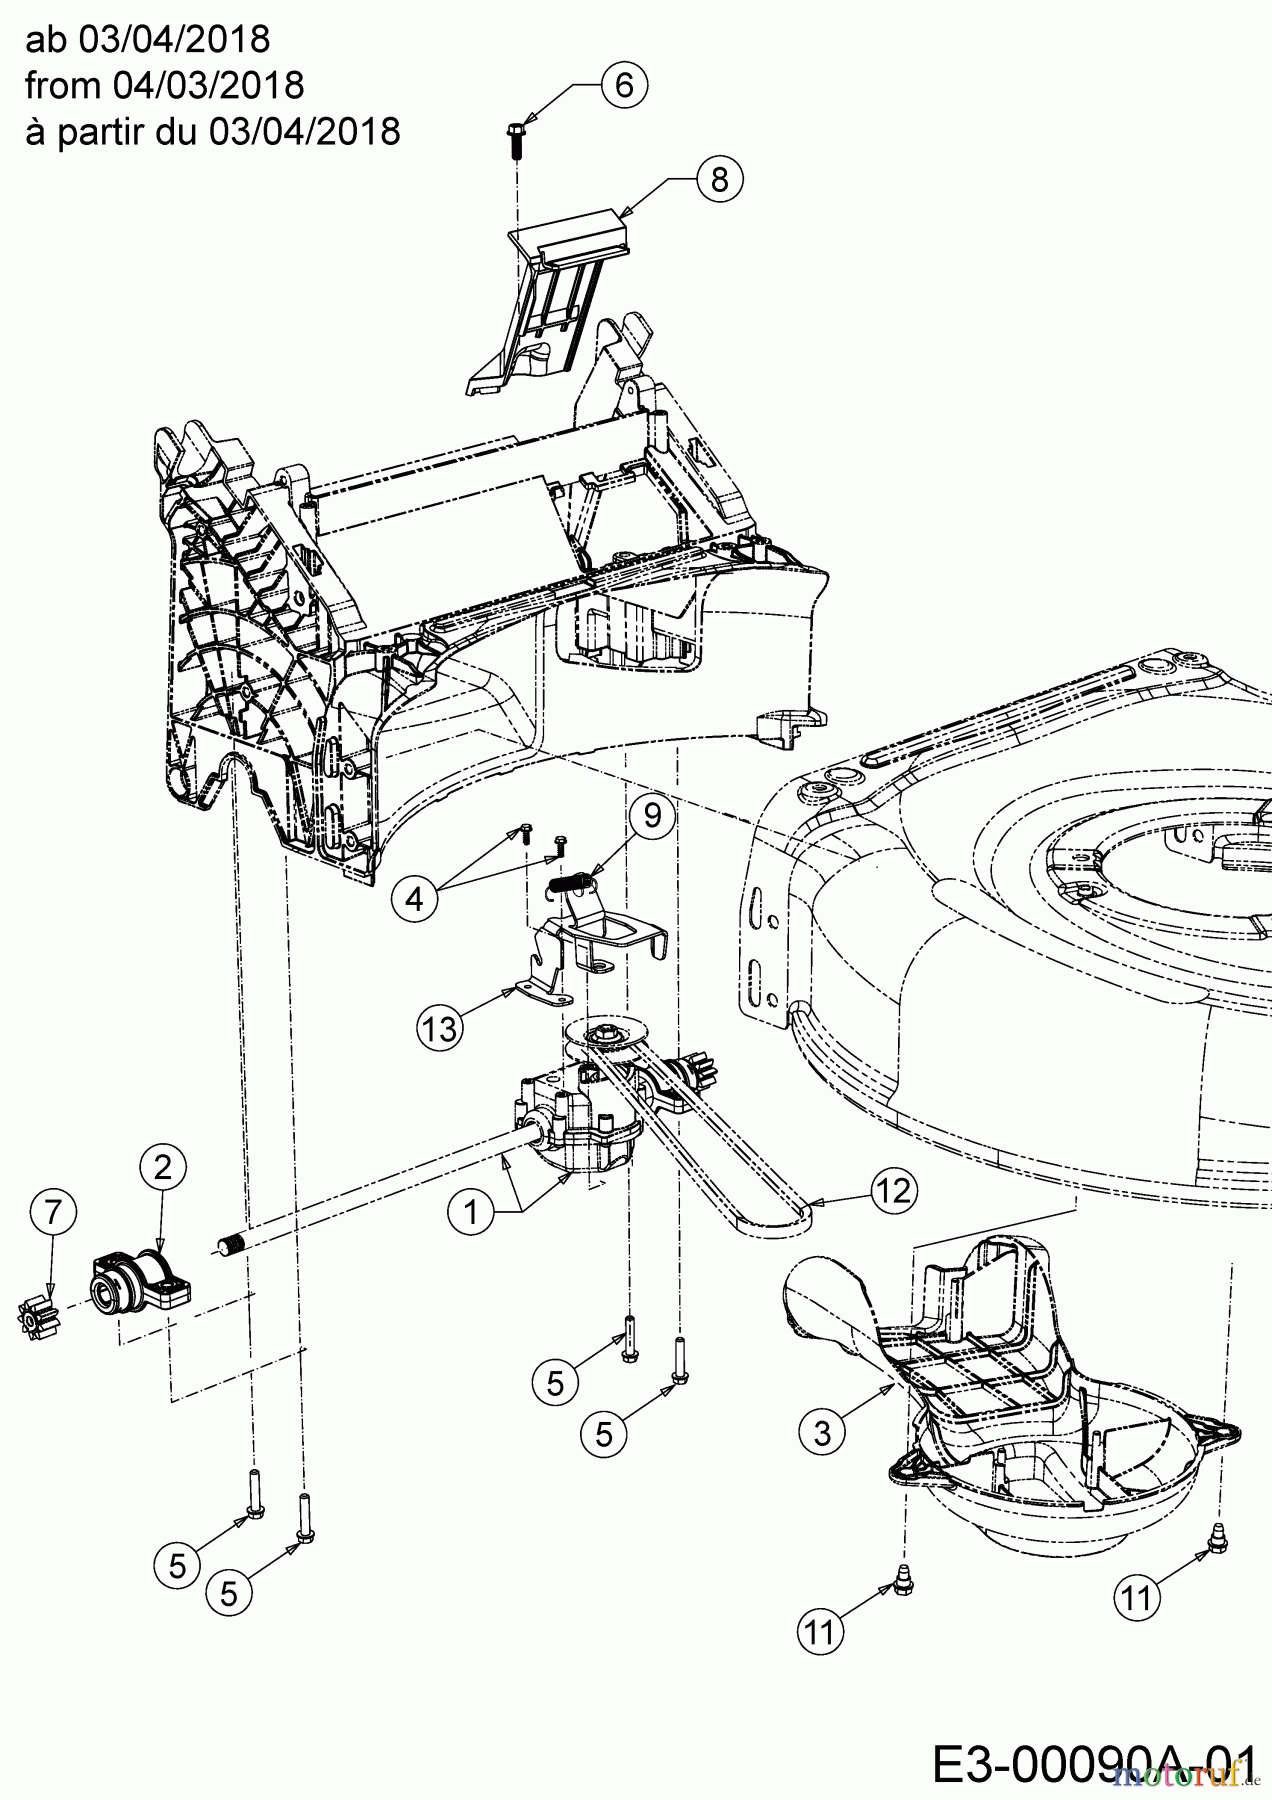  Wolf-Garten Petrol mower self propelled AT 5300 AHW 12C-PRJ6650  (2018) Gearbox, Belt from 04/03/2018